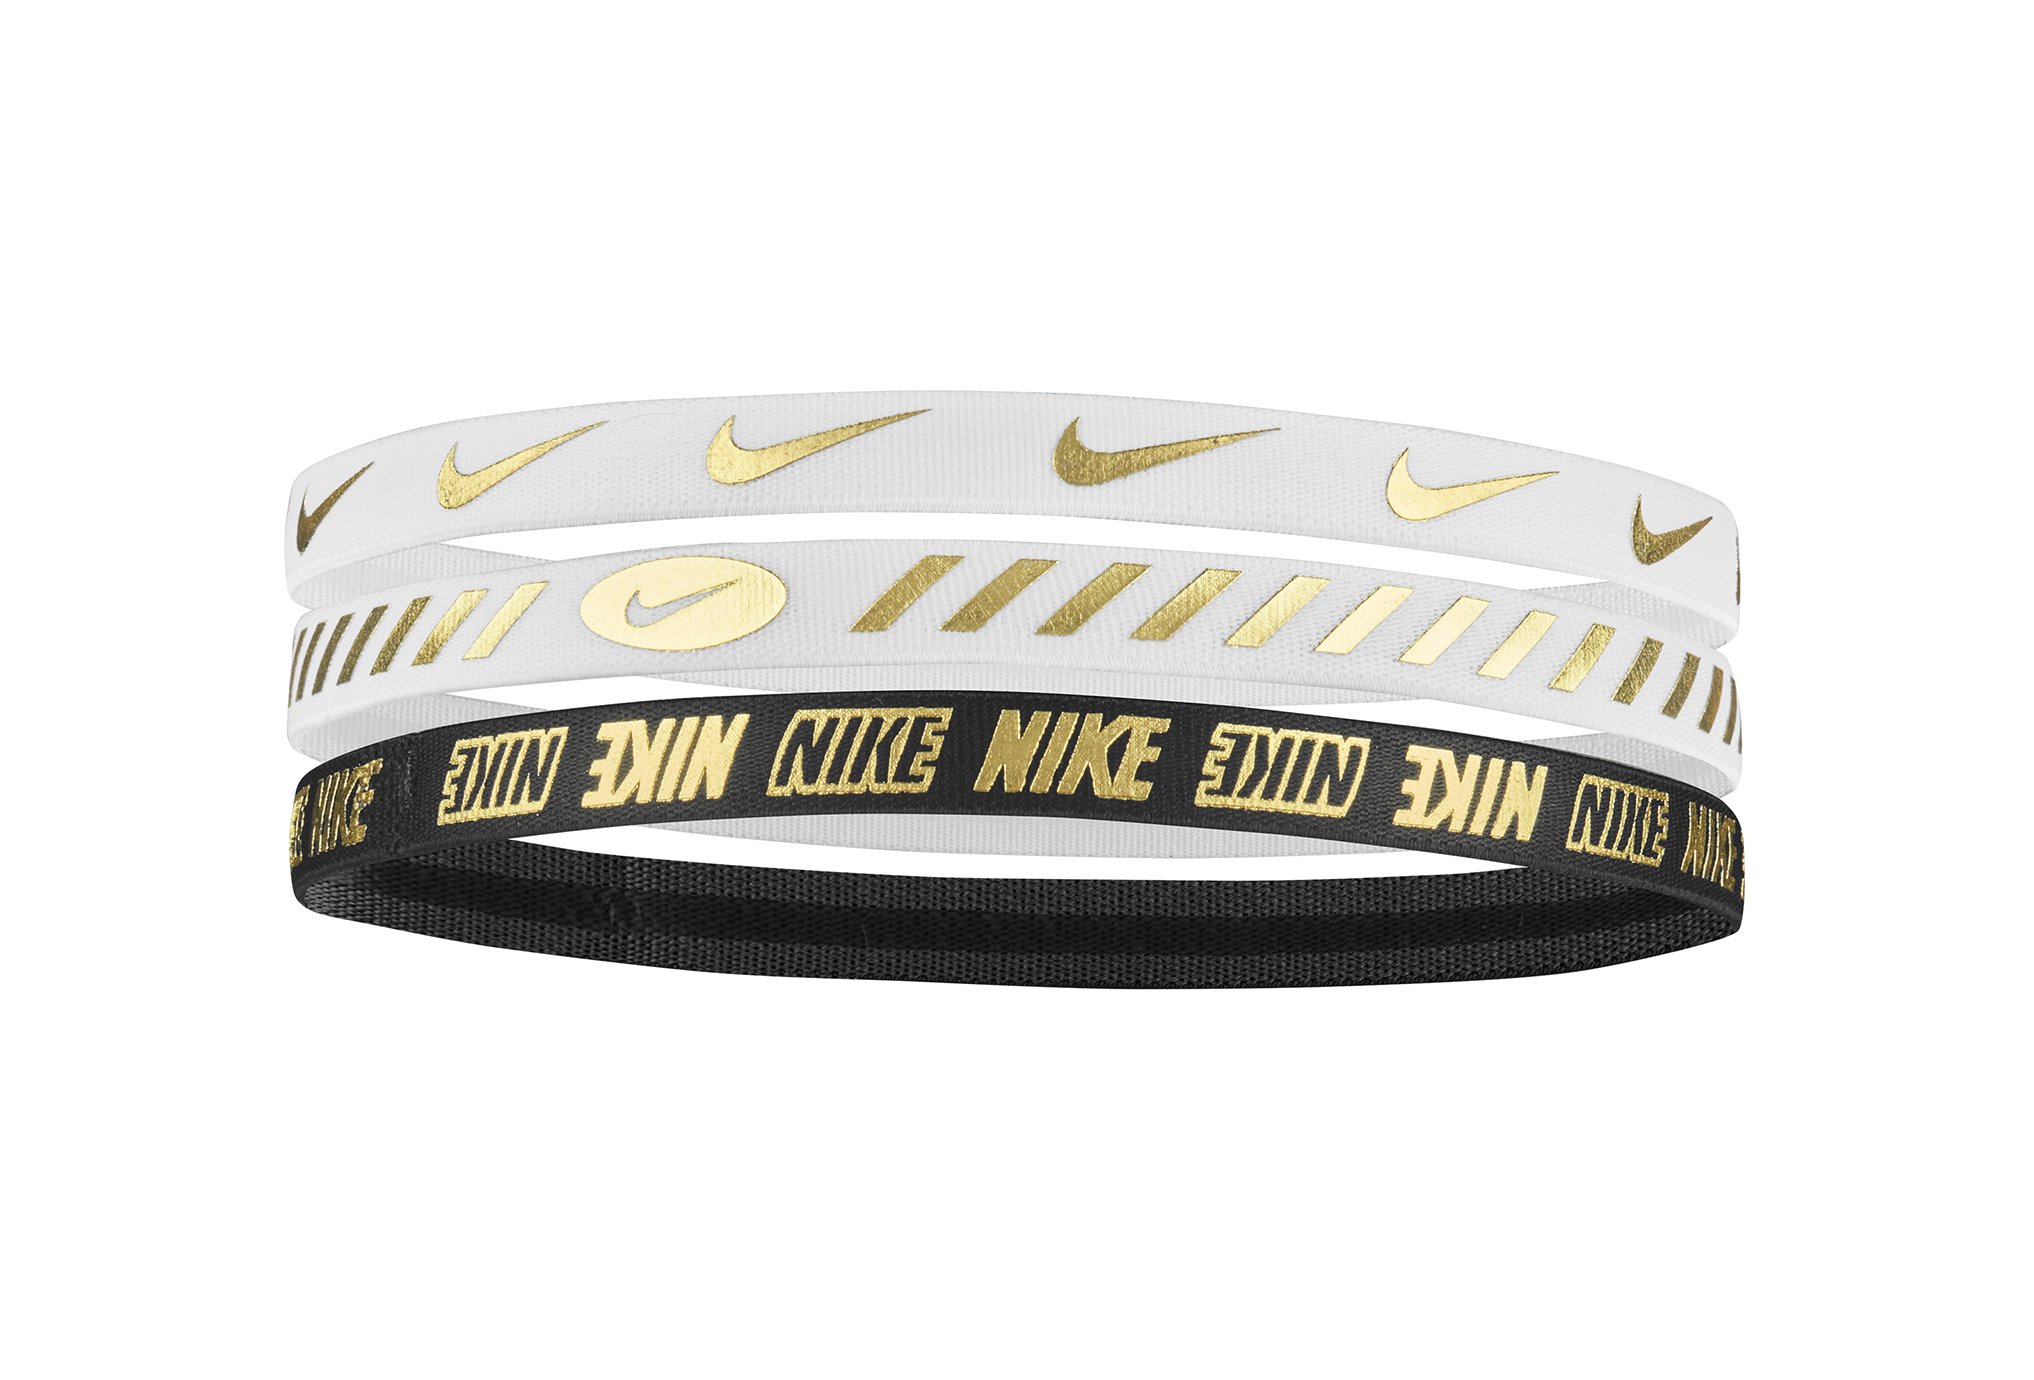 Nike Elastiques Headband Swoosh 2.0 X6 pas cher